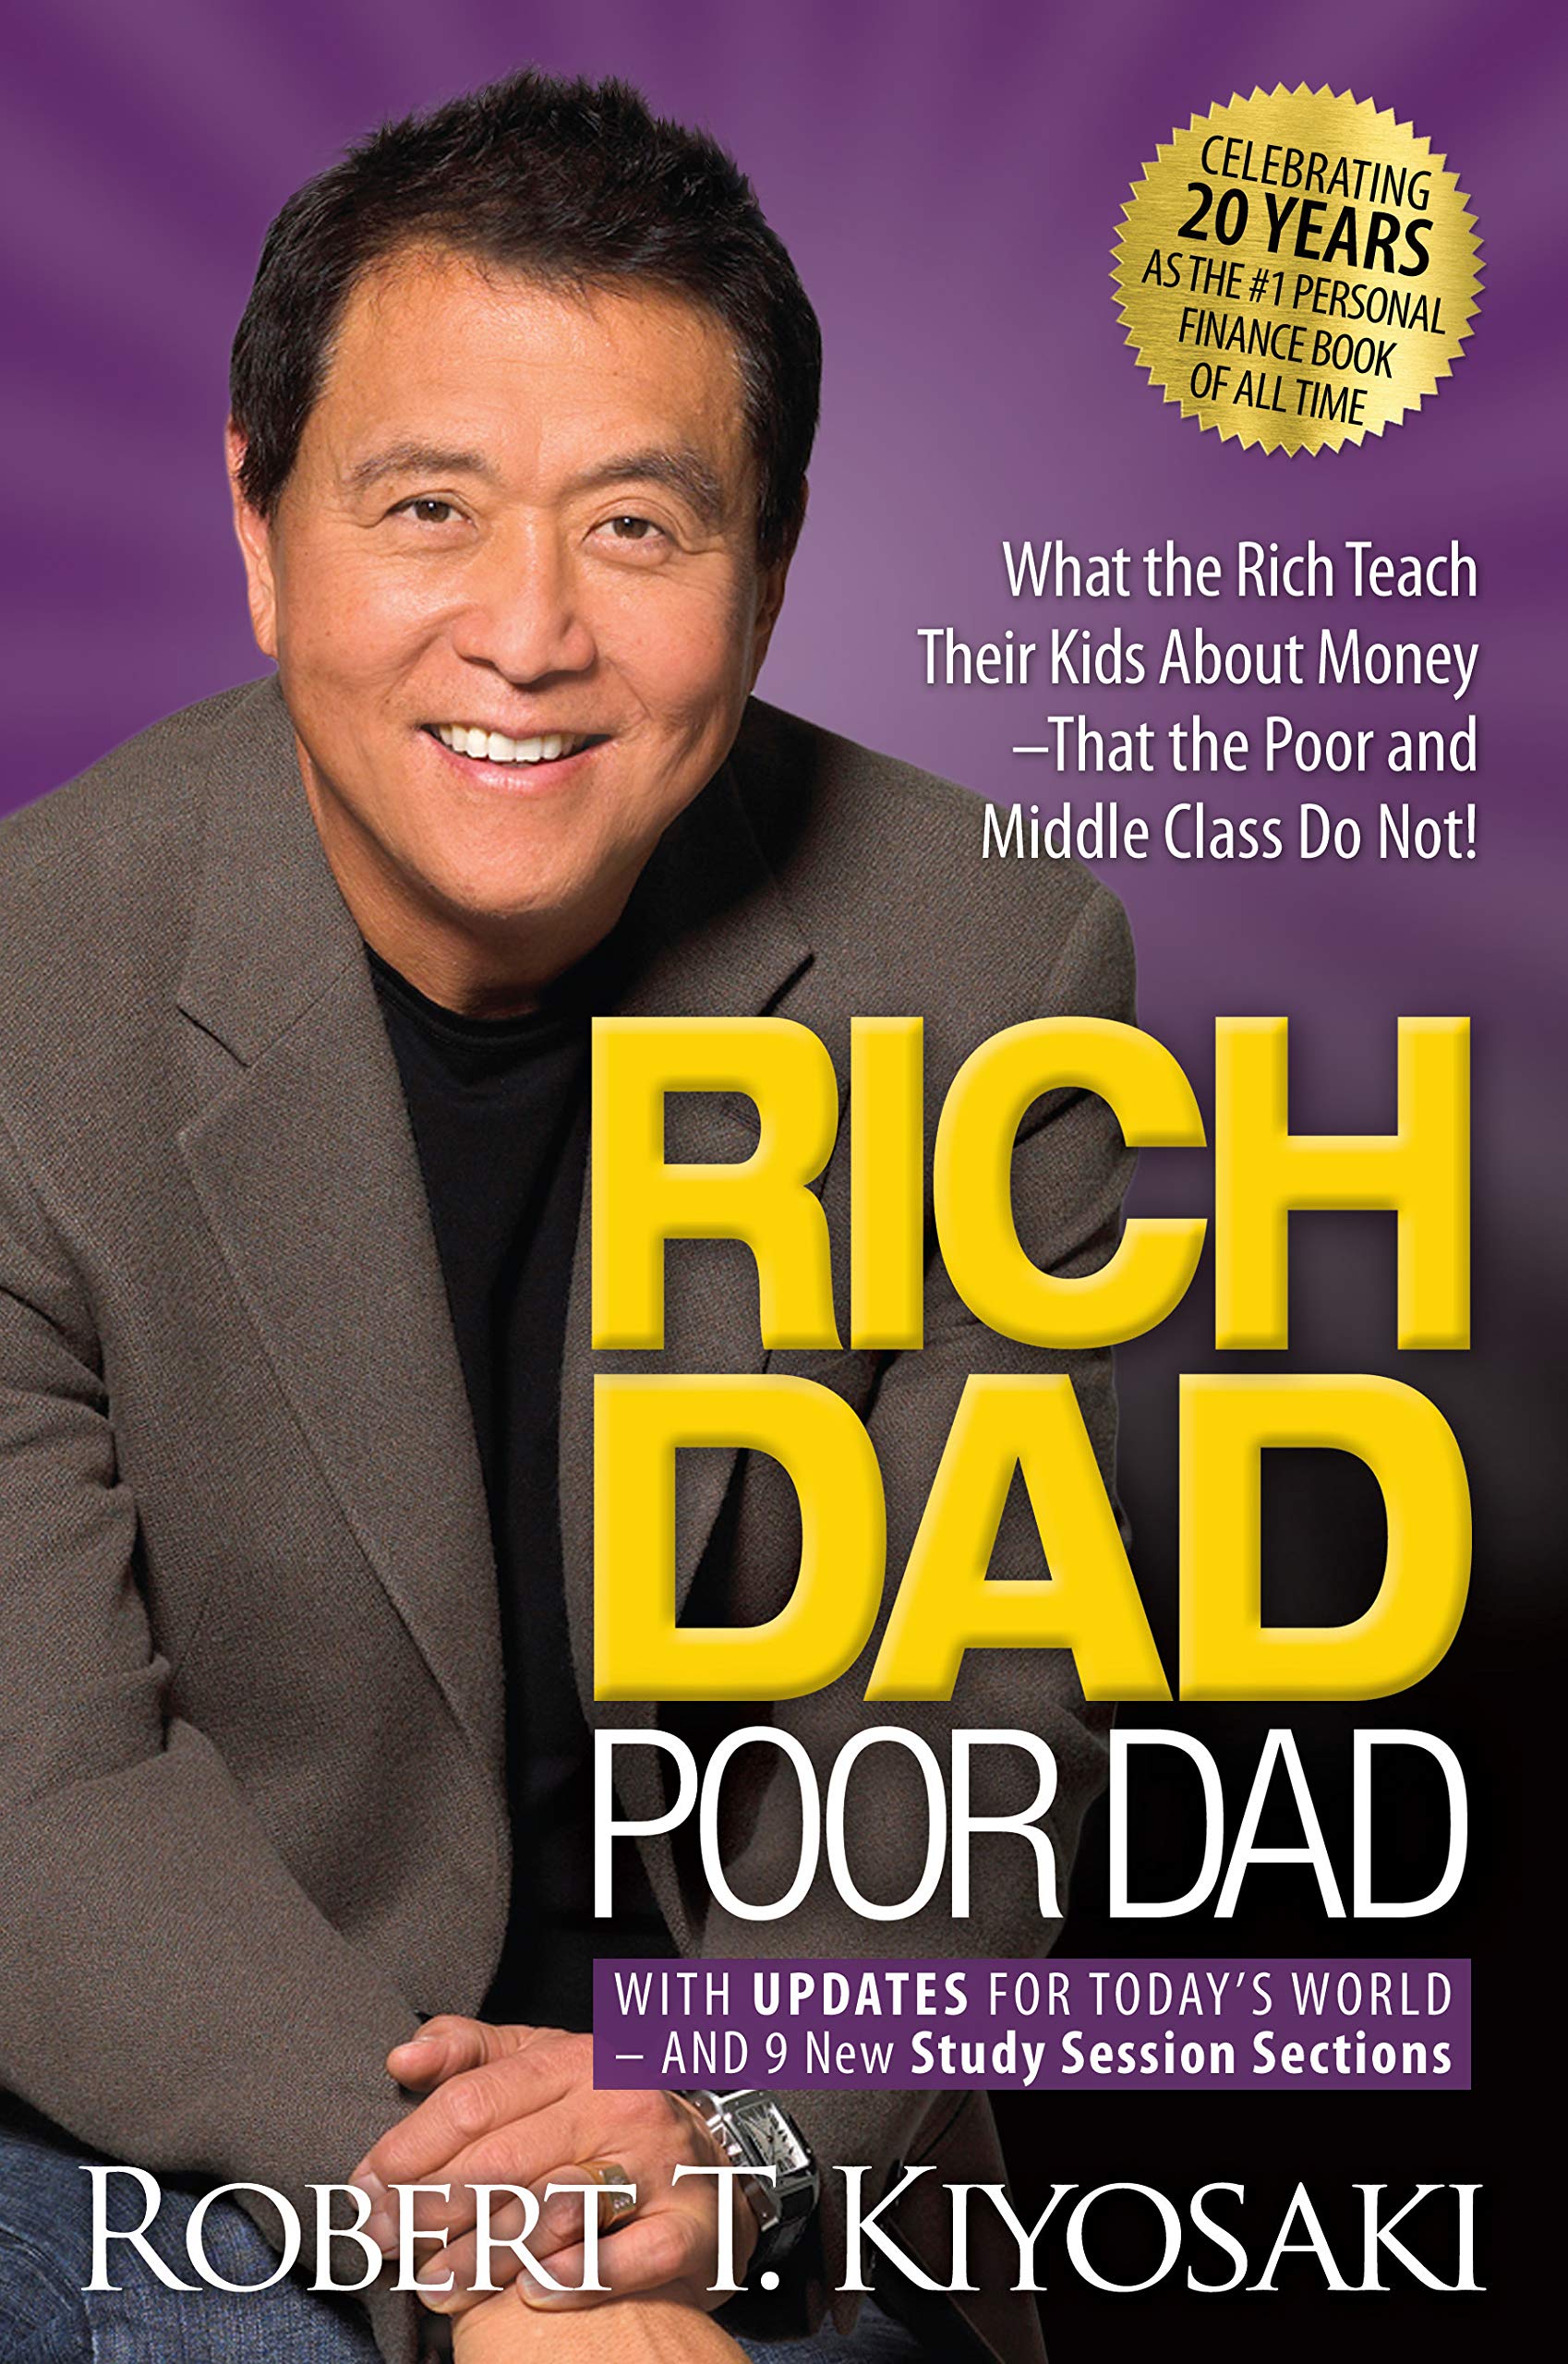 Rich dad, poor dad by Robert Kiyosaki and Sharon Lechter